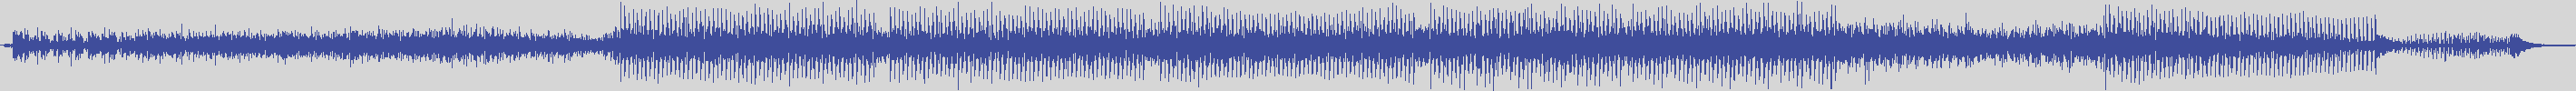 atomic_recordings [AR012] S D'Angelo - Tatuagem [Dub Mix] audio wave form